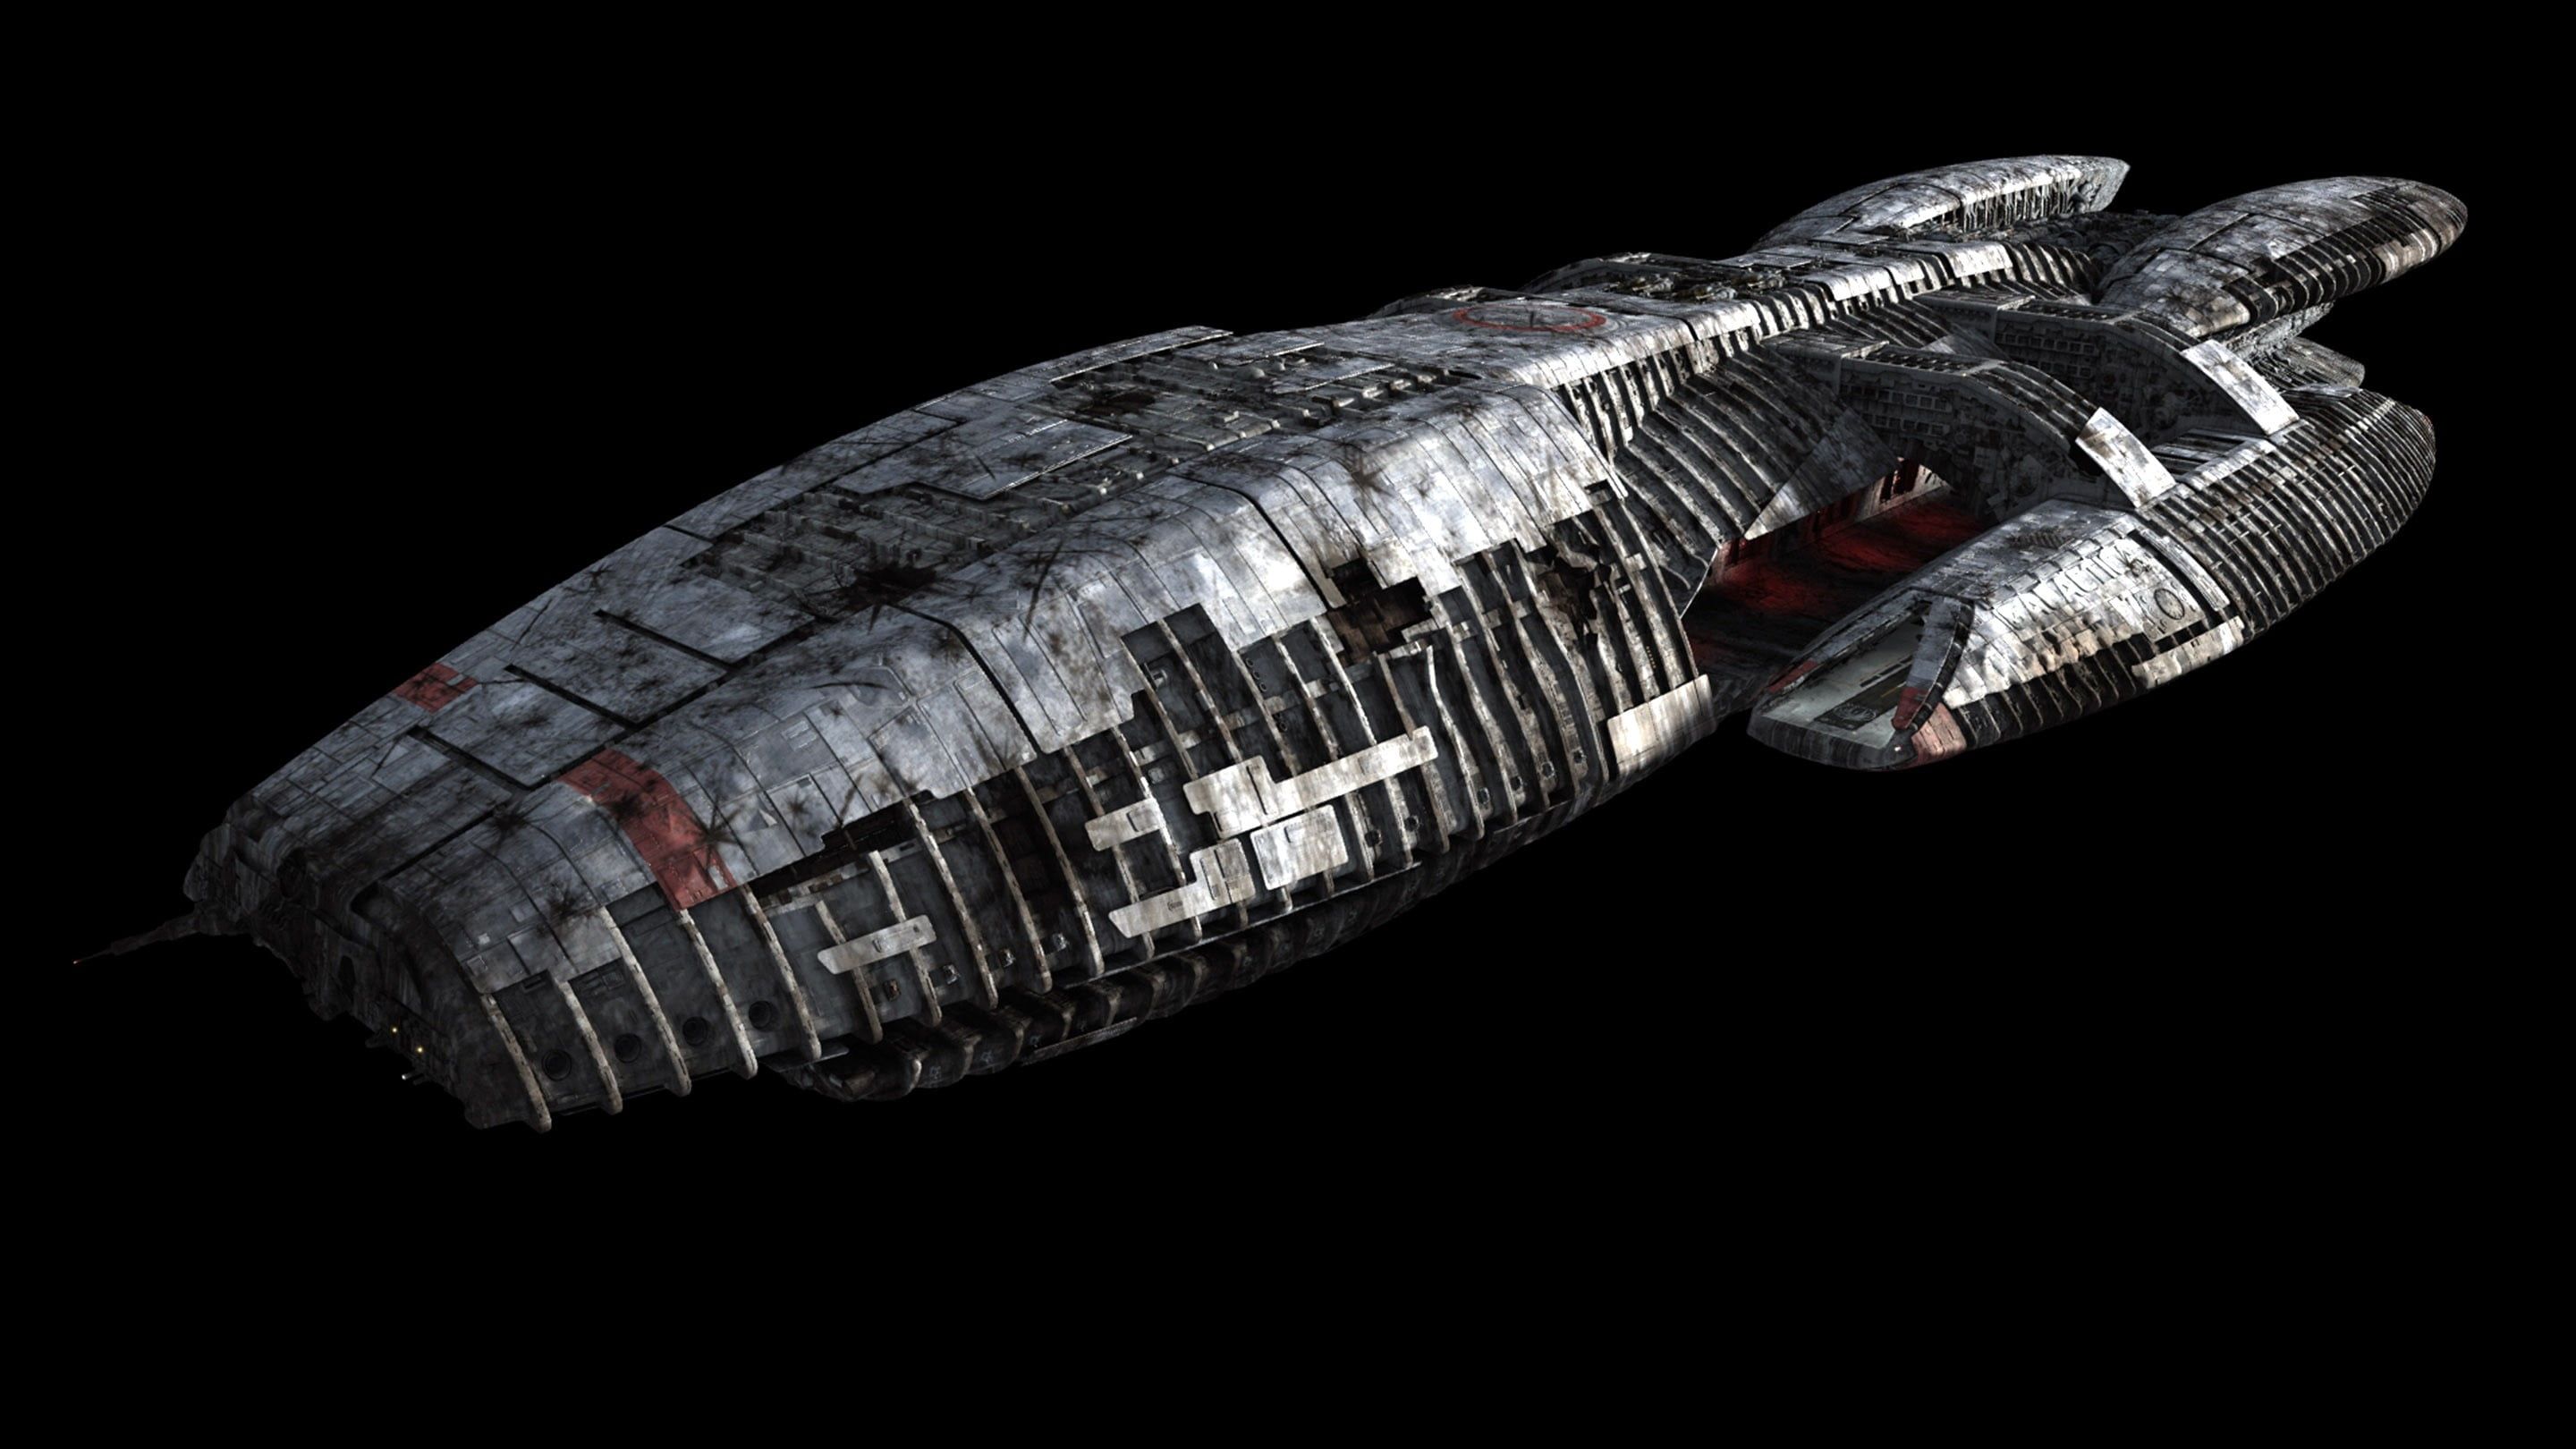 Silver and black space ship, Battlestar Galactica, space